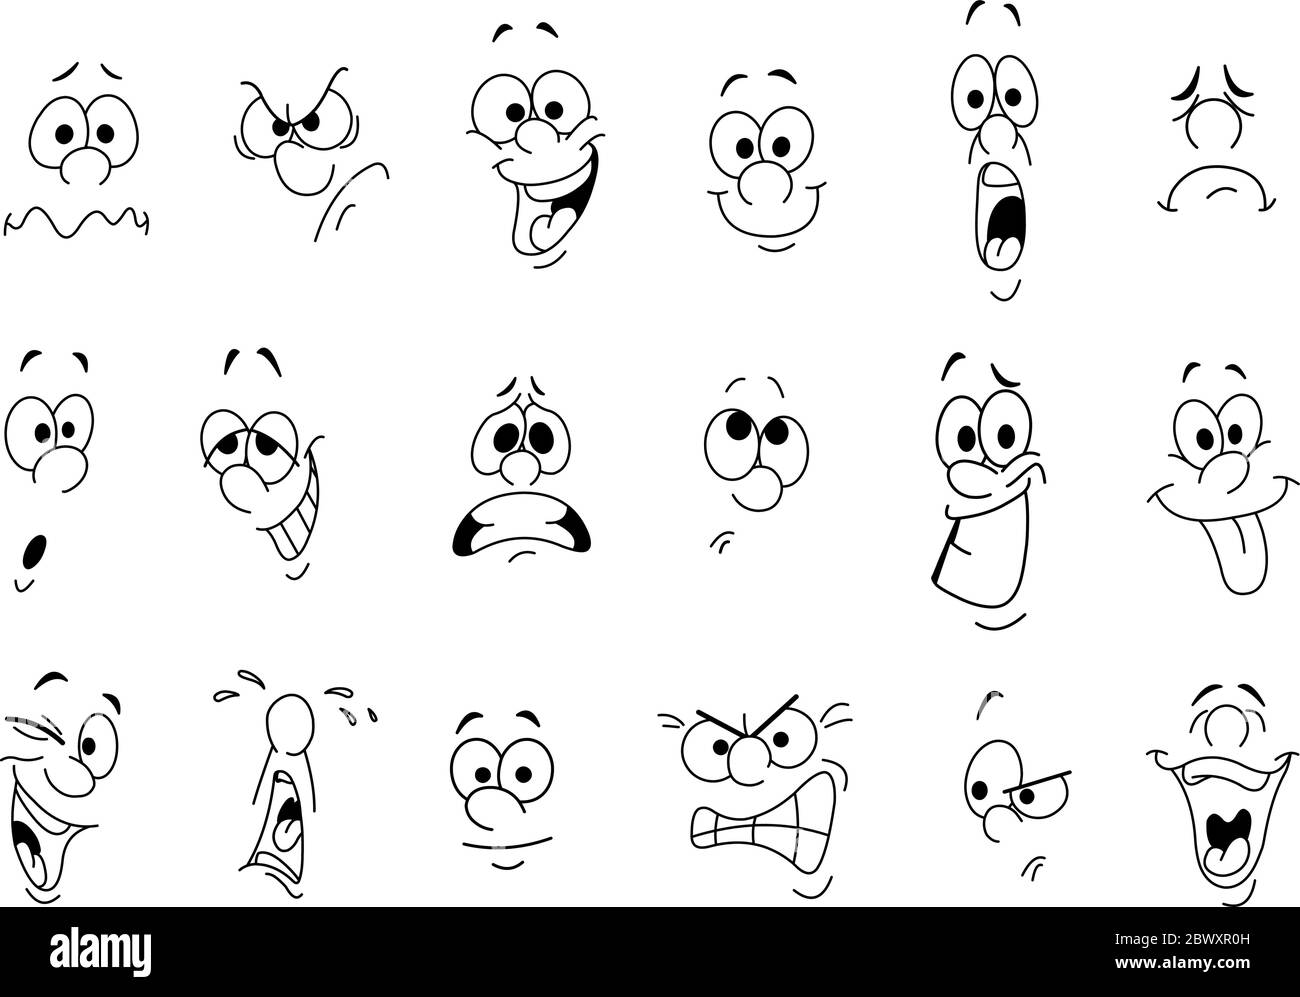 Cartoon facial expressions set Stock Vector